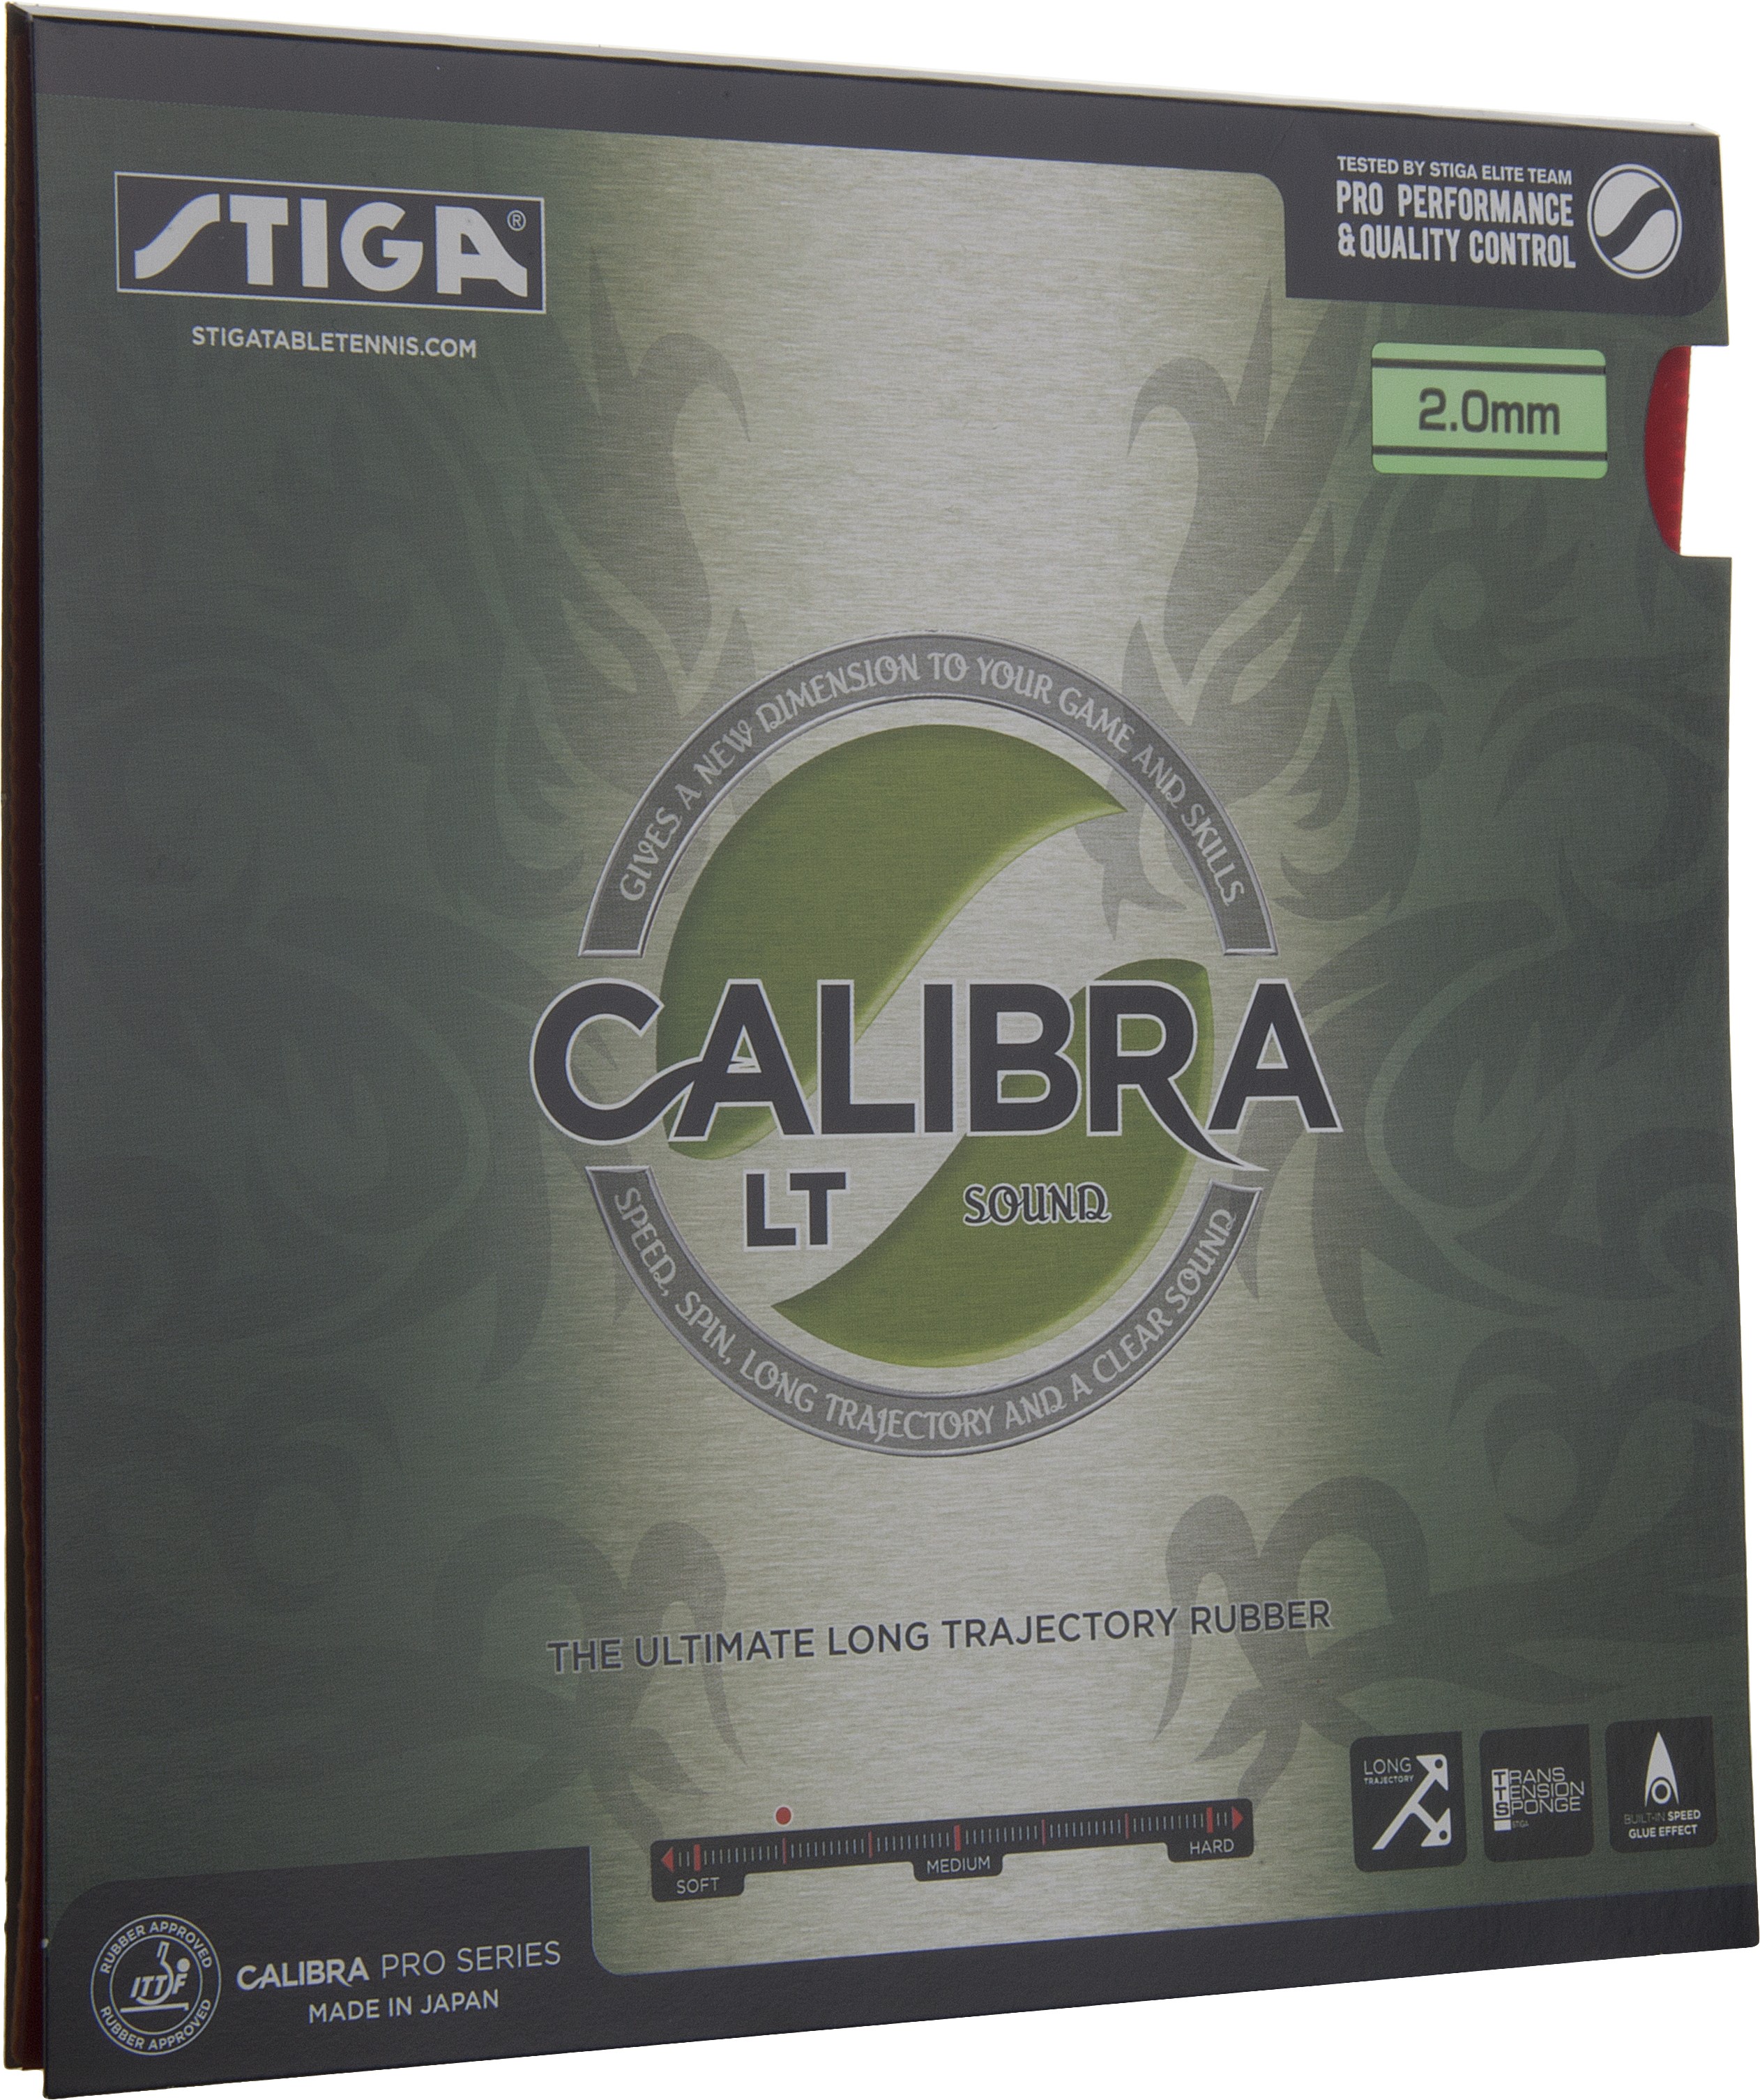 Stiga Calibra LT schwarz 2,0mm neu OVP Tischtennis Belag 